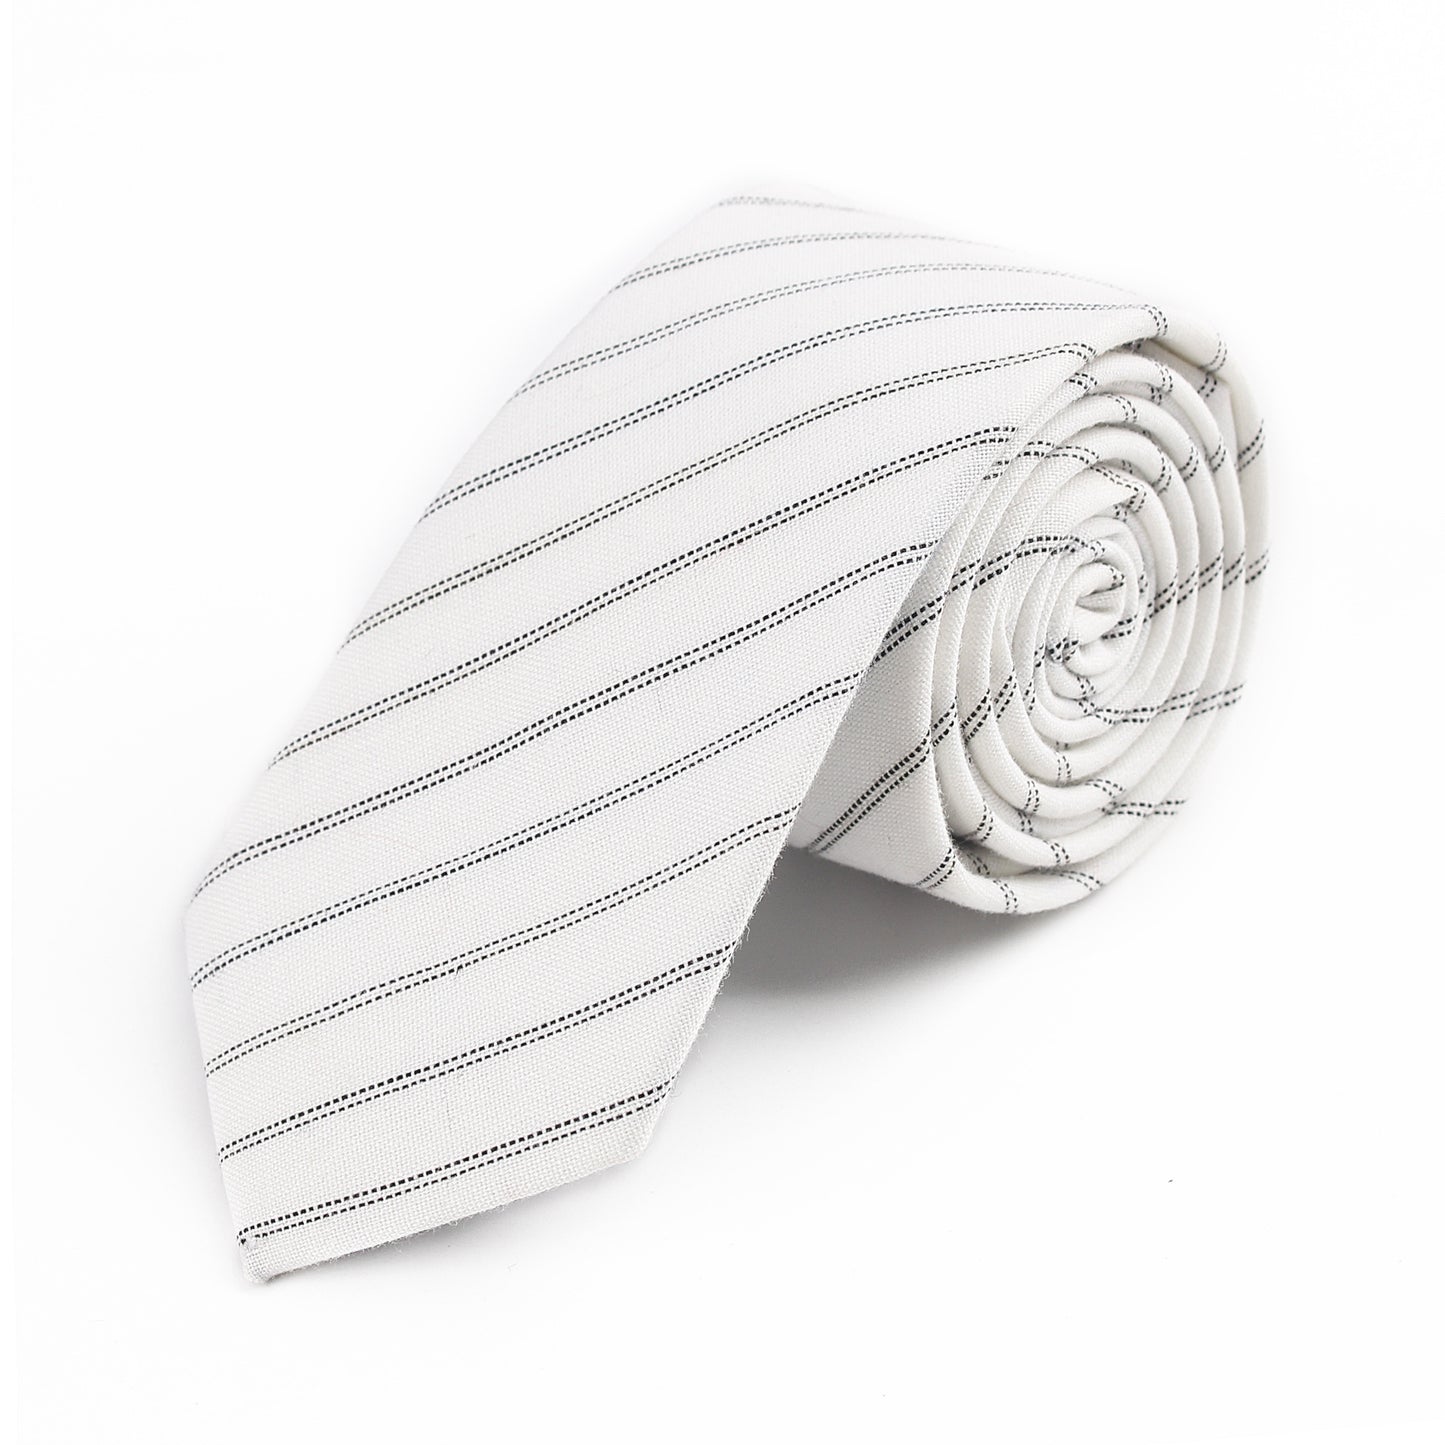 Men's Tie Cotton Jacquard Casual Business Korean Wedding Birthday Party Literary Cotton Striped Tie